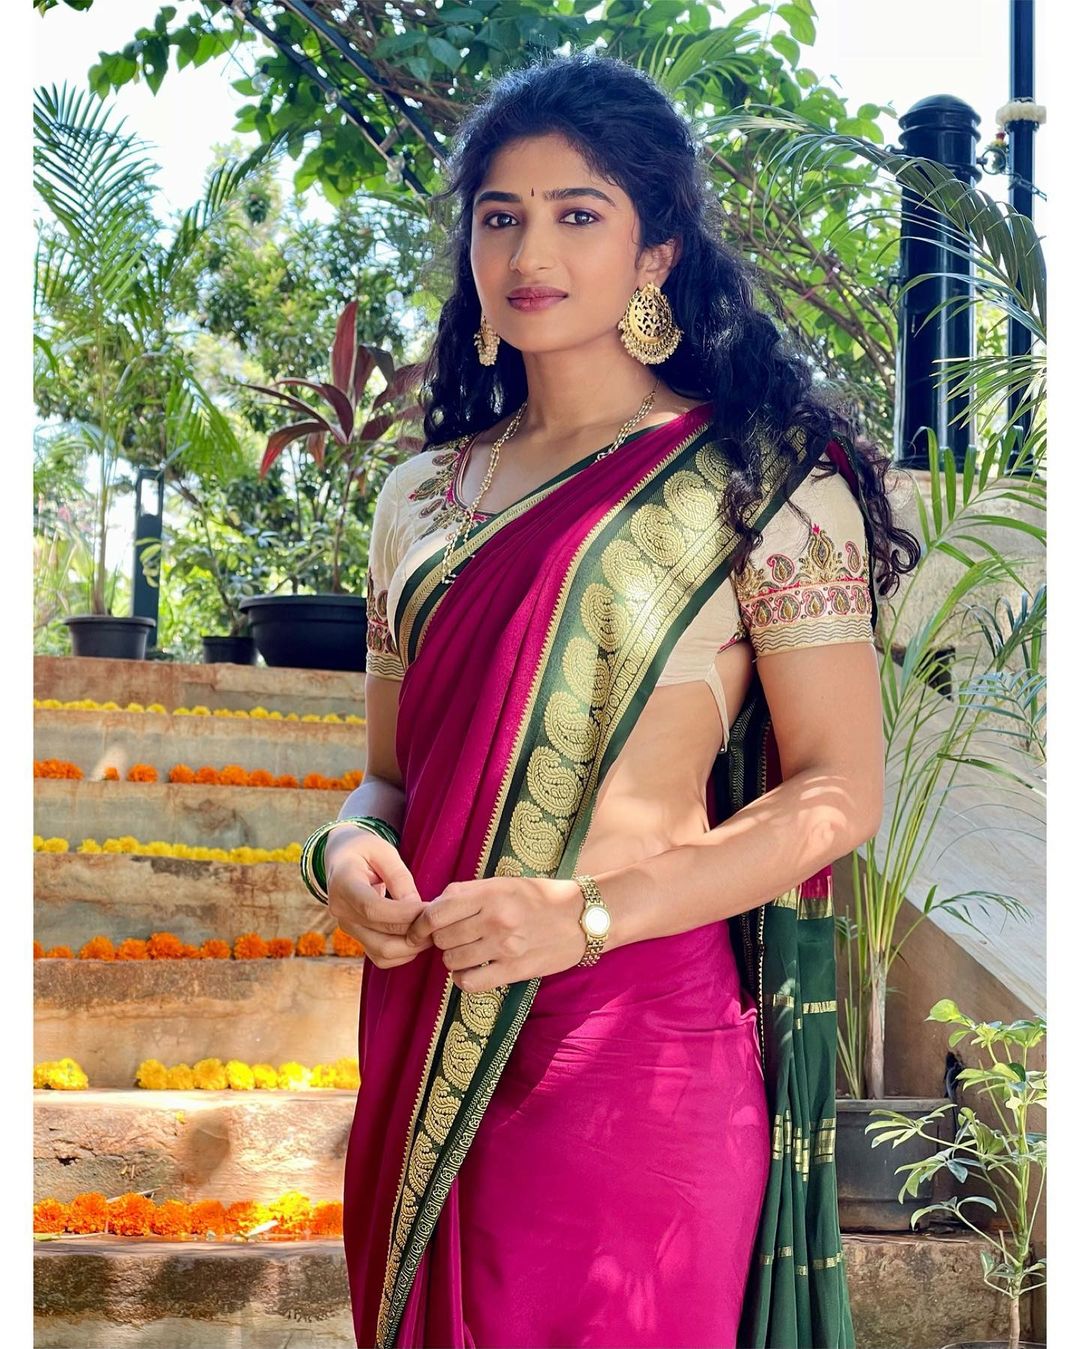 Actress roshini prakash most beautiful pictures-Actressroshini, Roshini Prakash Photos,Spicy Hot Pics,Images,High Resolution WallPapers Download